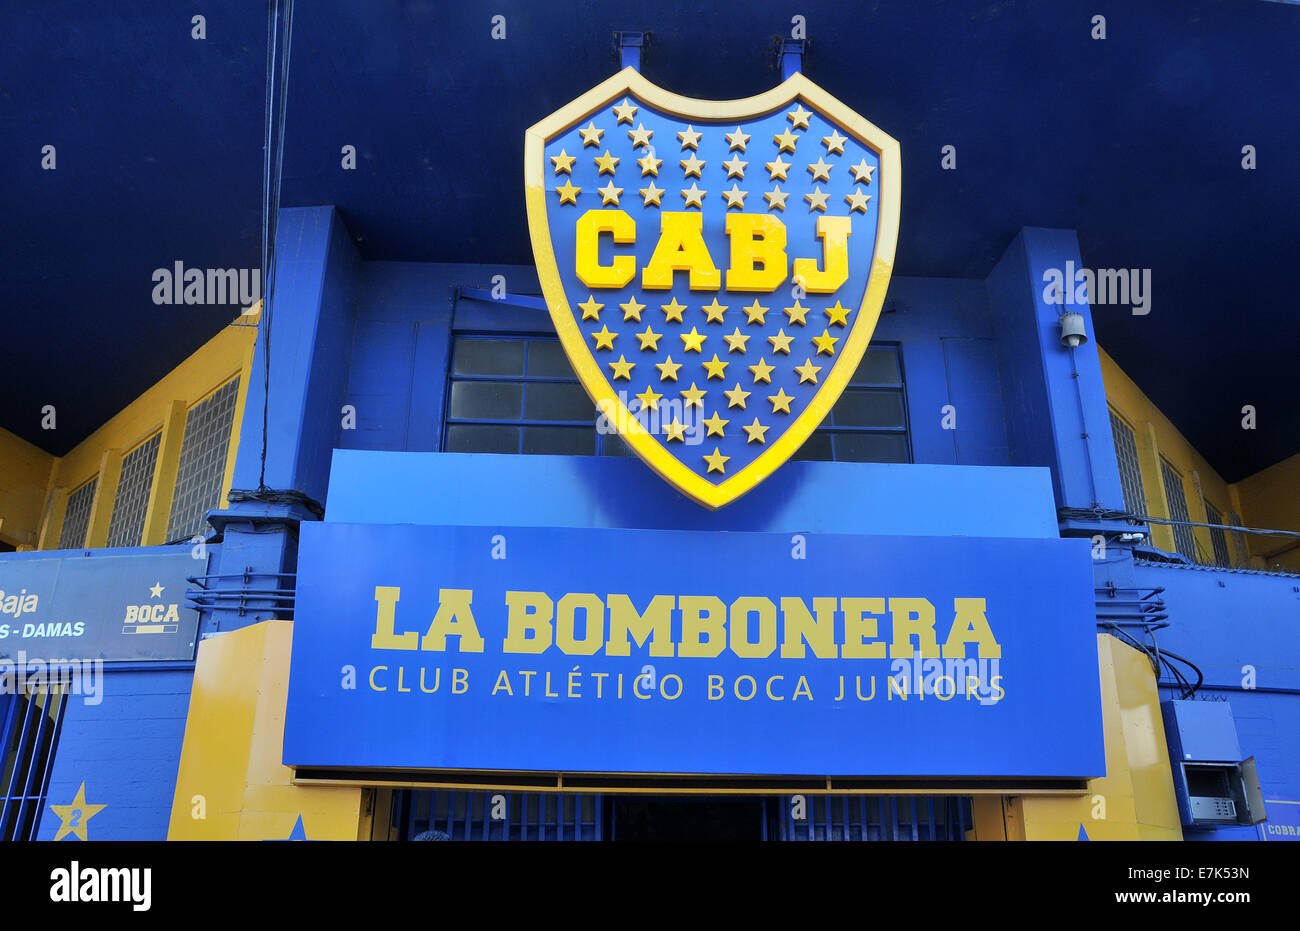 La Bombonera Club Atletico Boca Juniors La Boca Buenos Aires Argentinien Stockfotografie Alamy